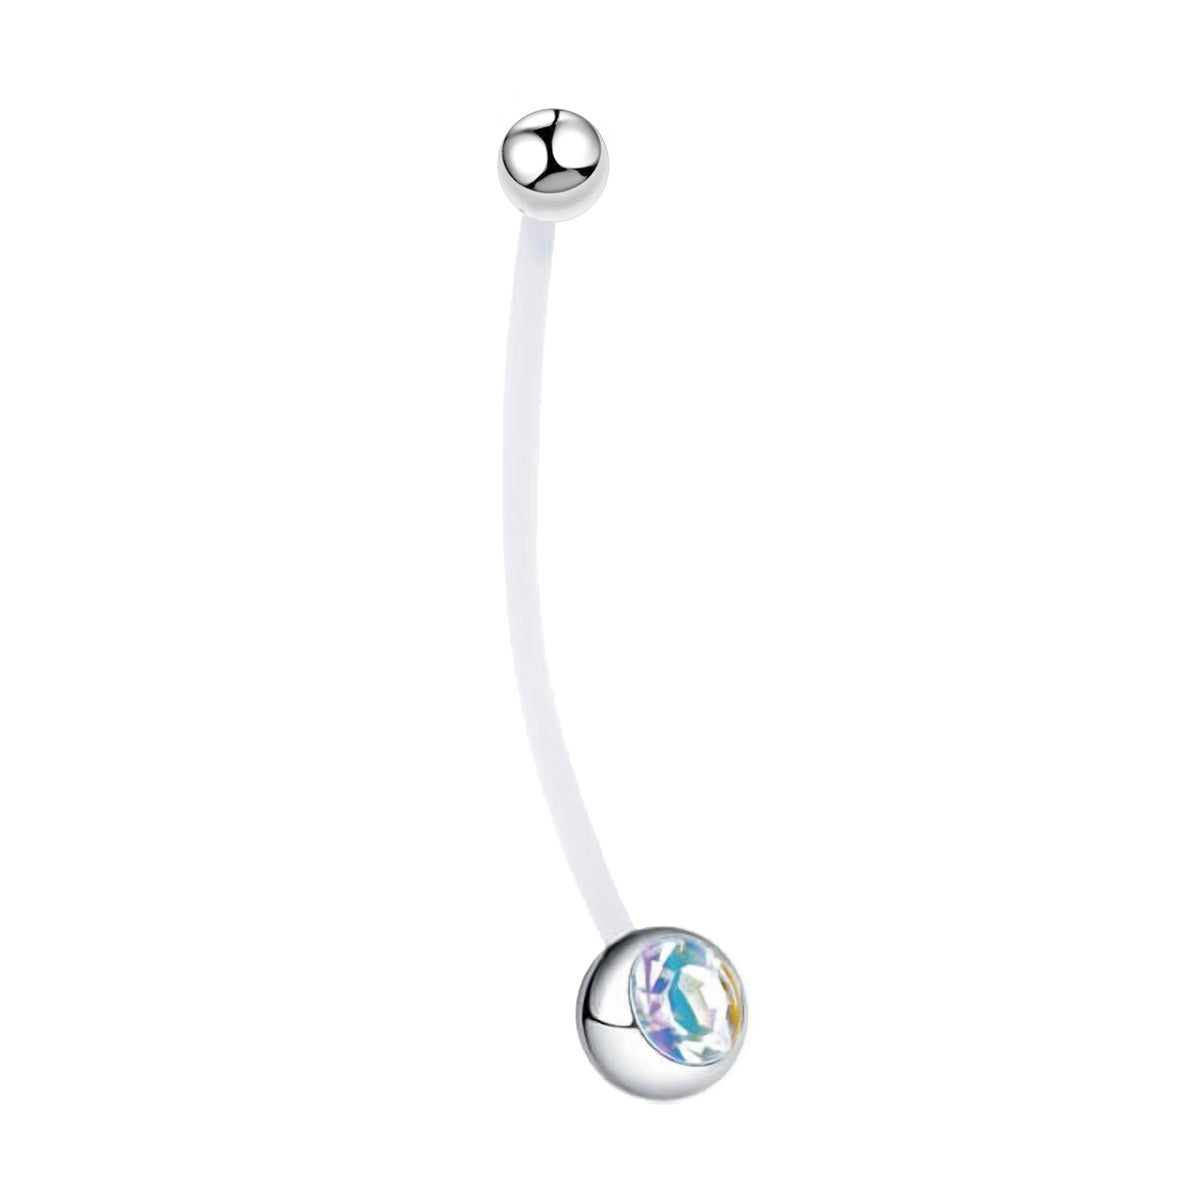 Pregnancy belly button ring 2,5cm (Steel316L / bioplastic)